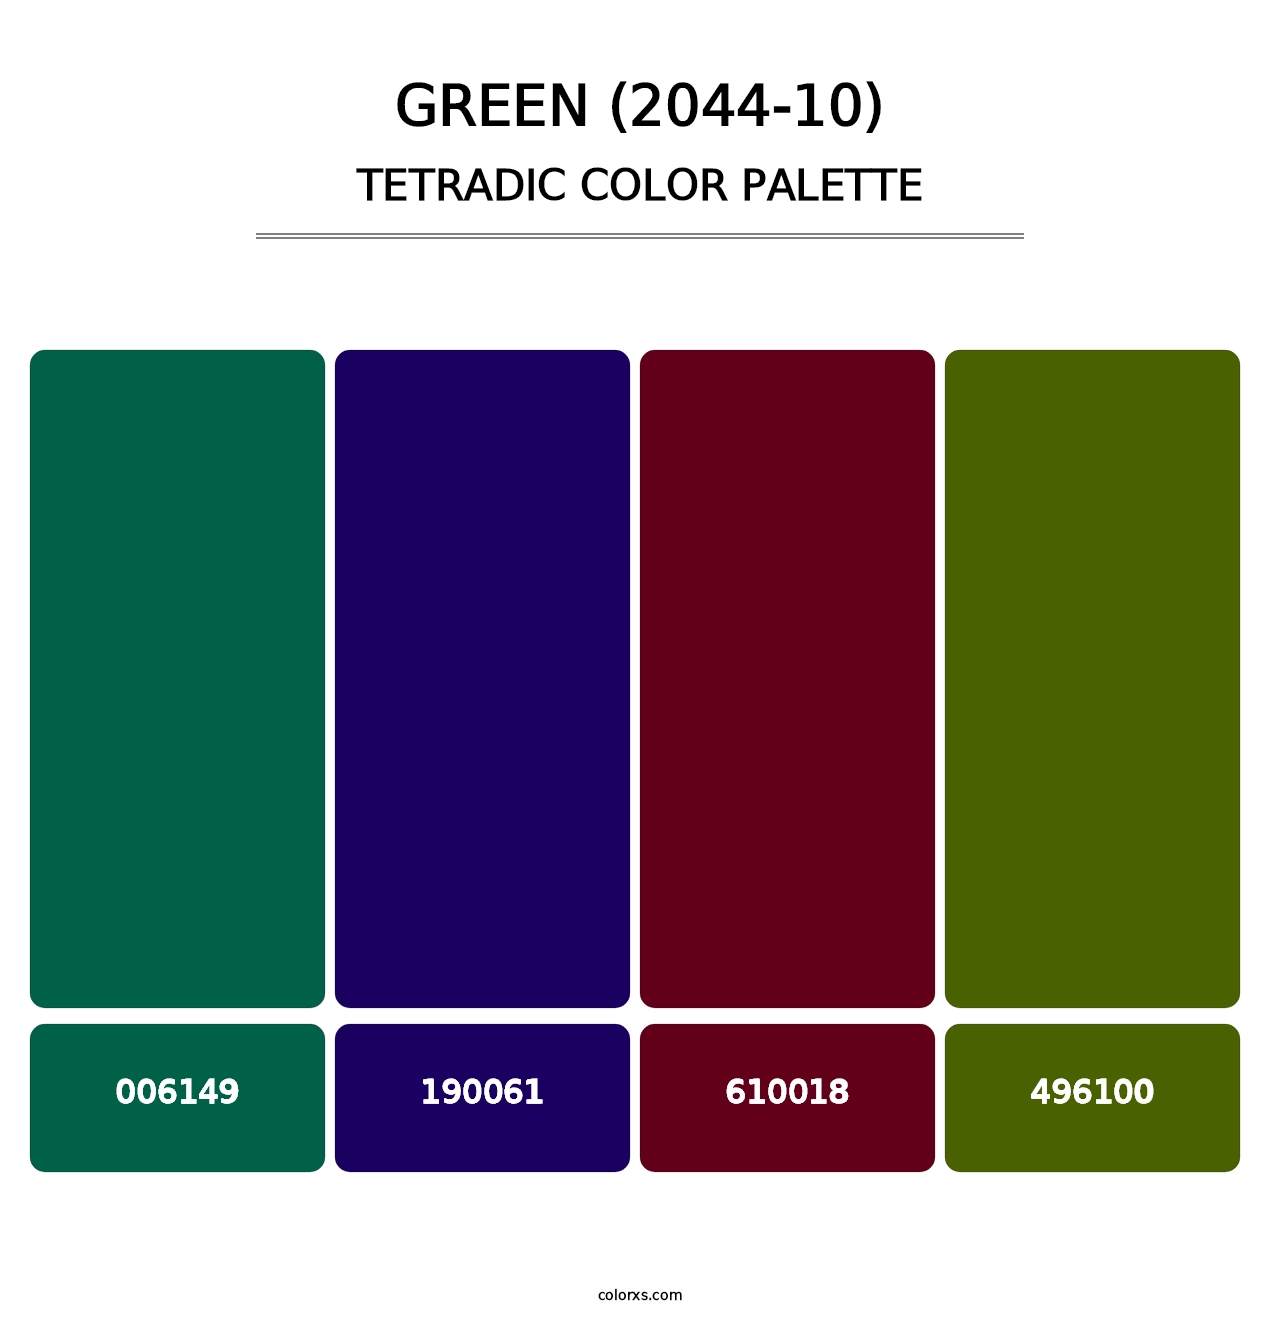 Green (2044-10) - Tetradic Color Palette